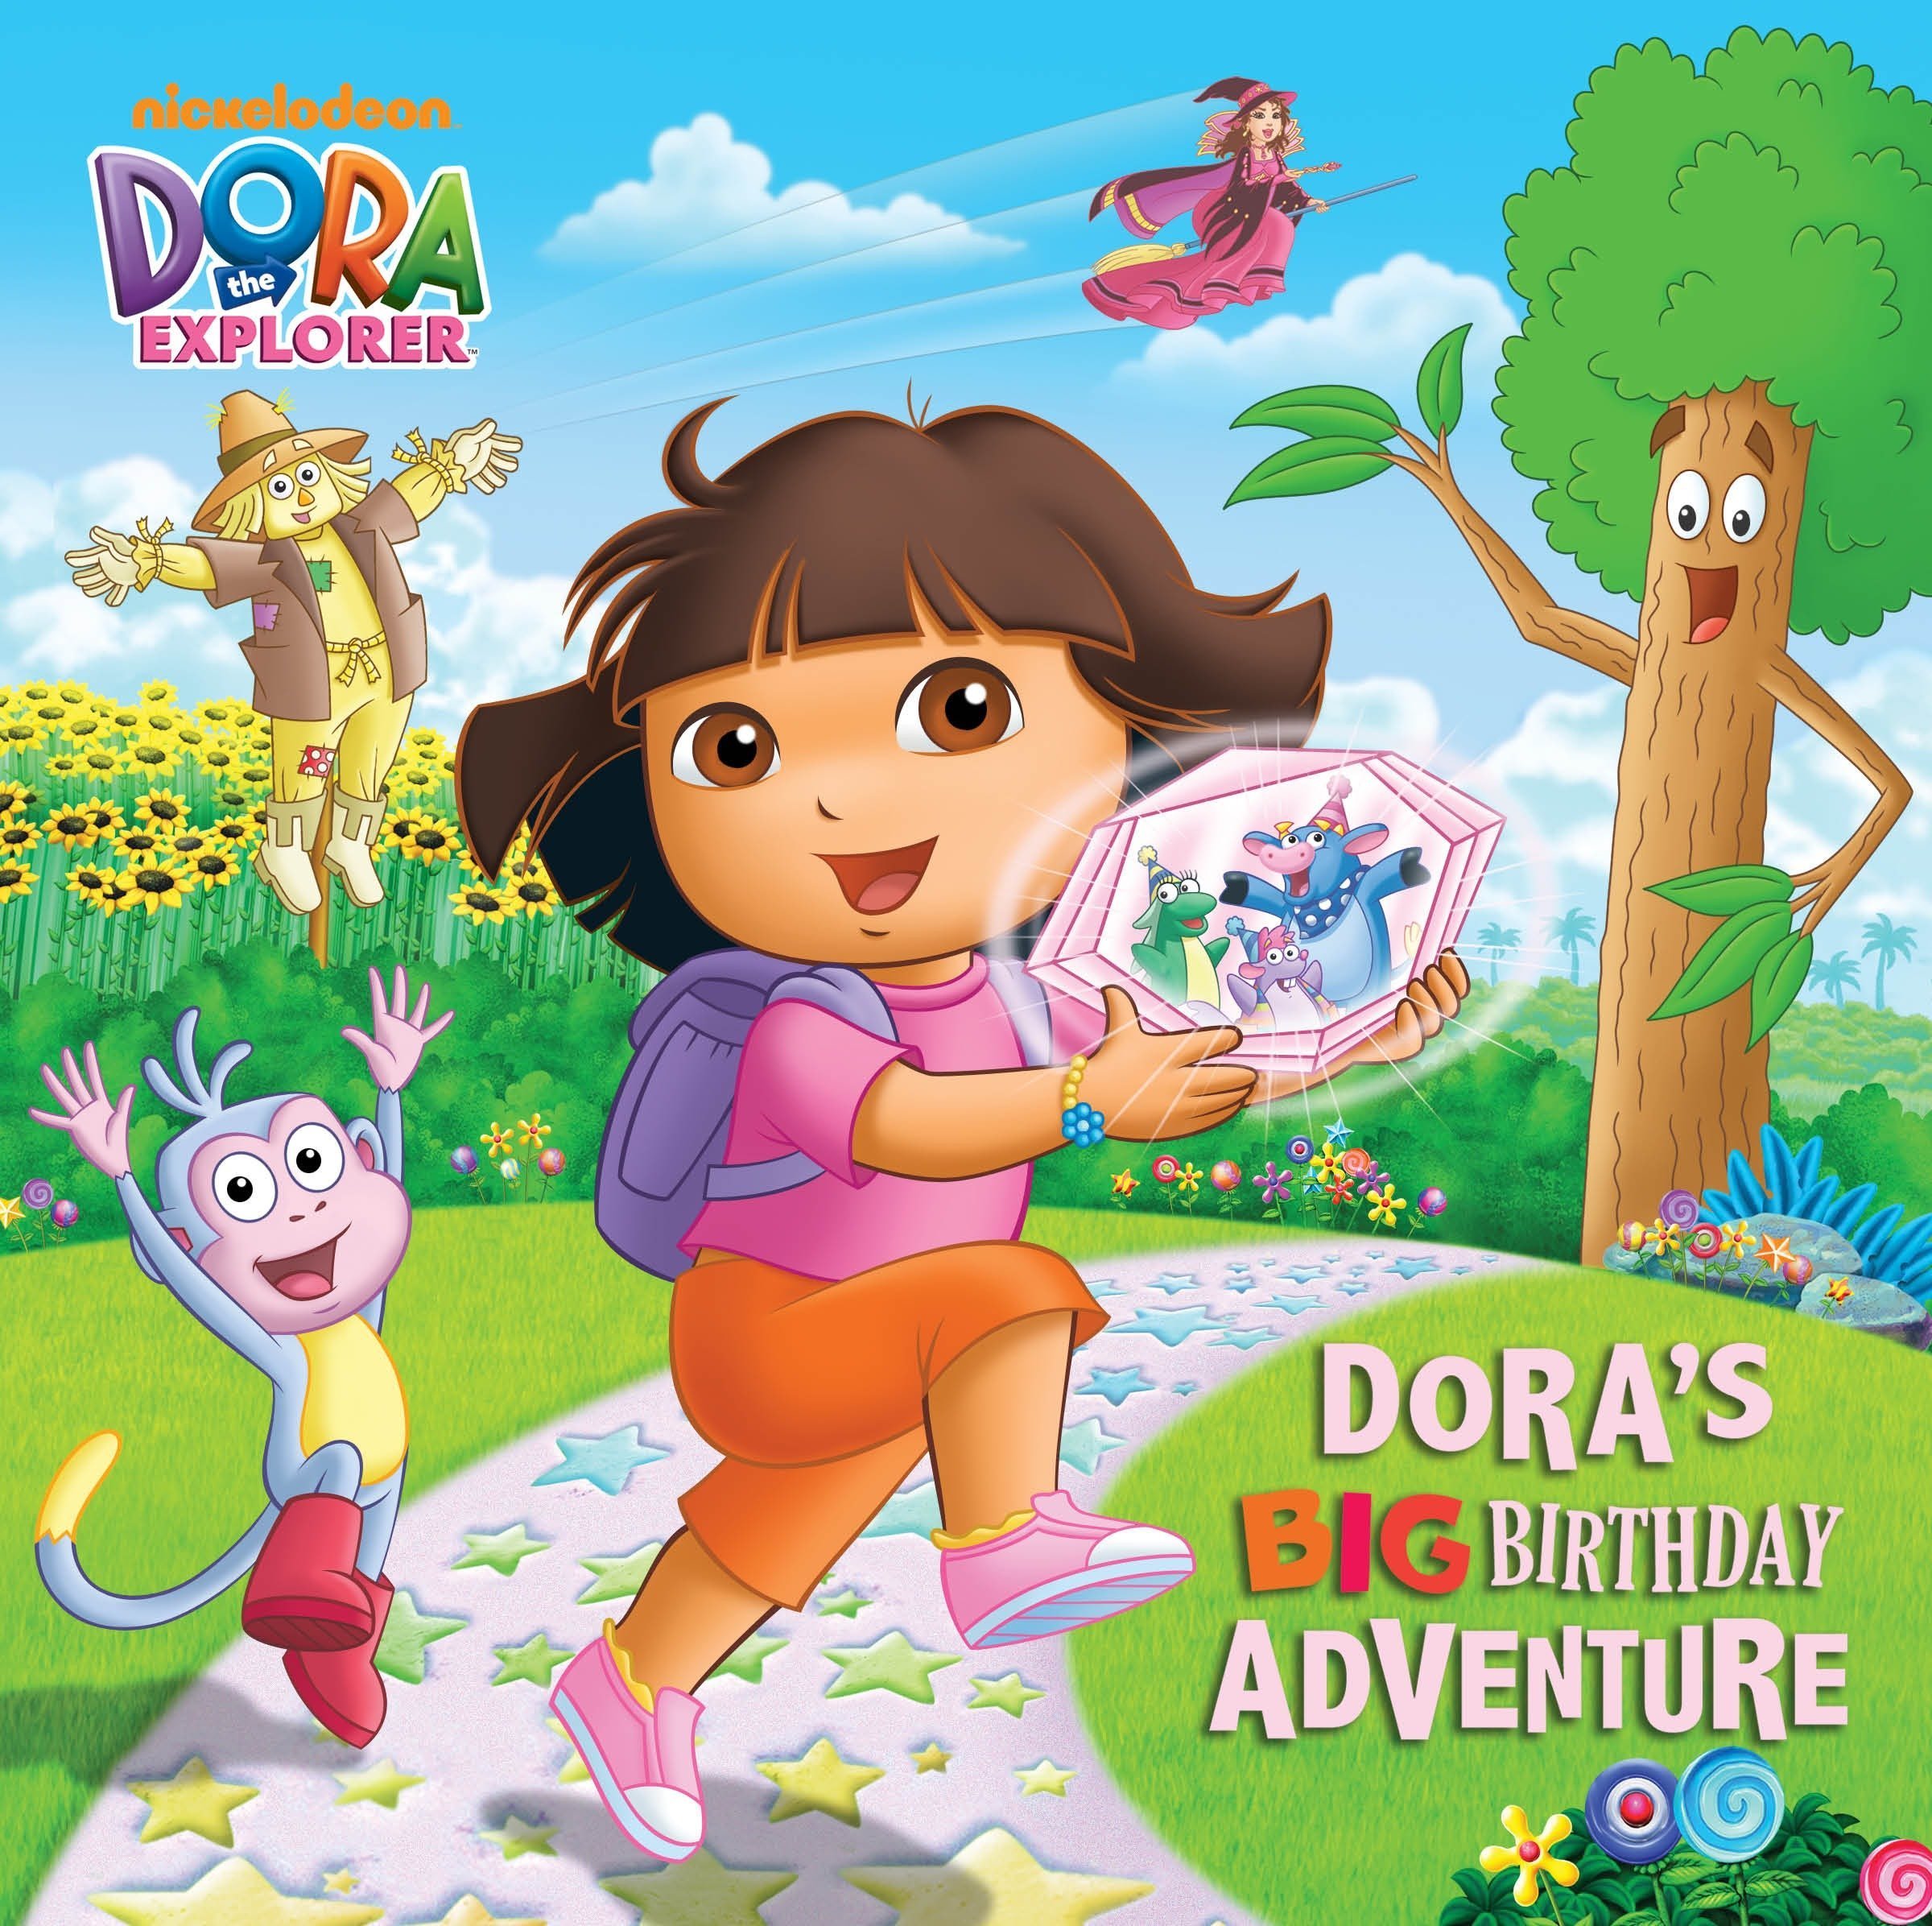 dora the explorer carnival adventure ticket